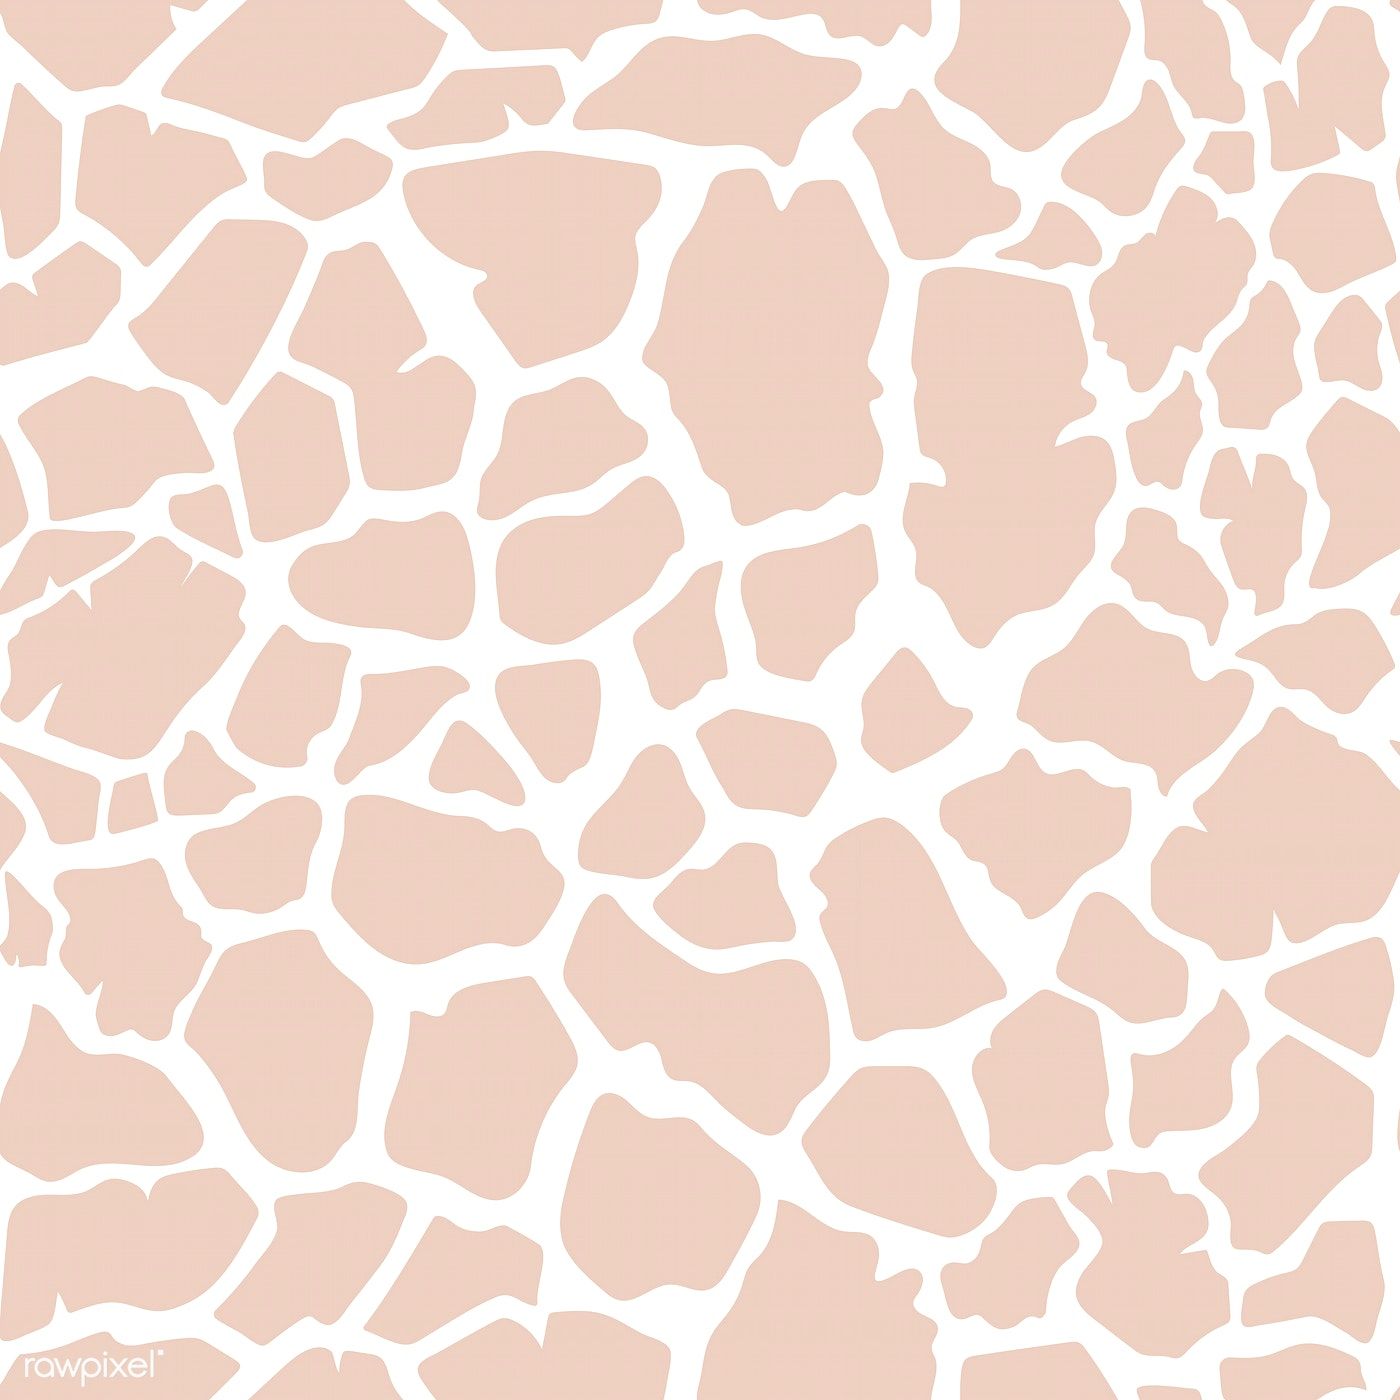 Seamless giraffe skin pattern vector. free image. Cow print wallpaper, Phone wallpaper patterns, Cute patterns wallpaper